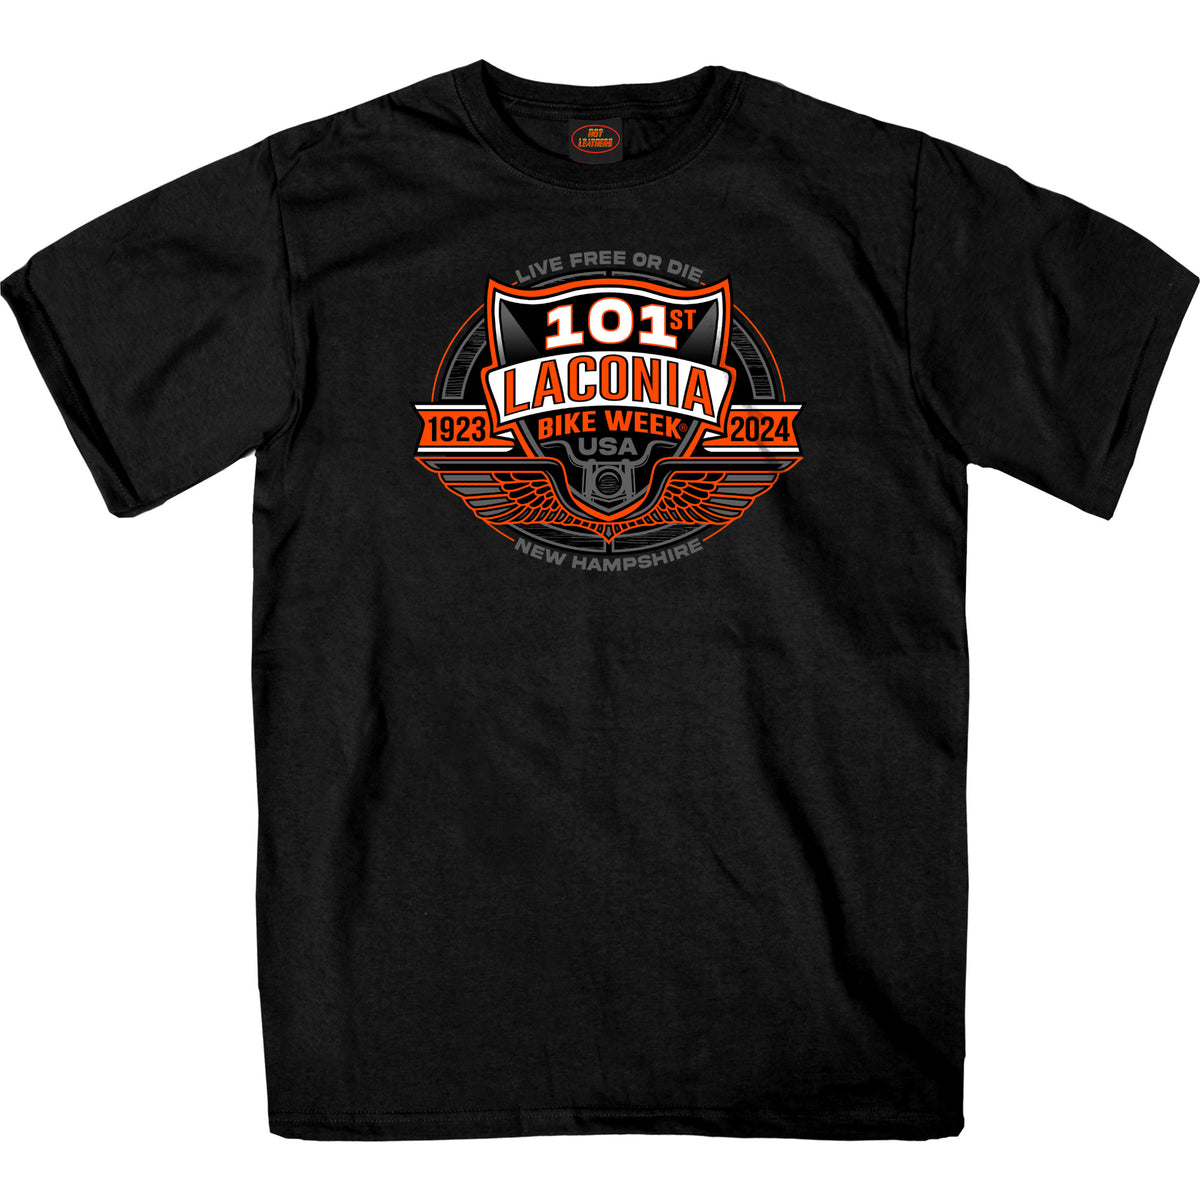 2024 Laconia Bike Week 101 Rally Logo Black T-shirt ELM1061